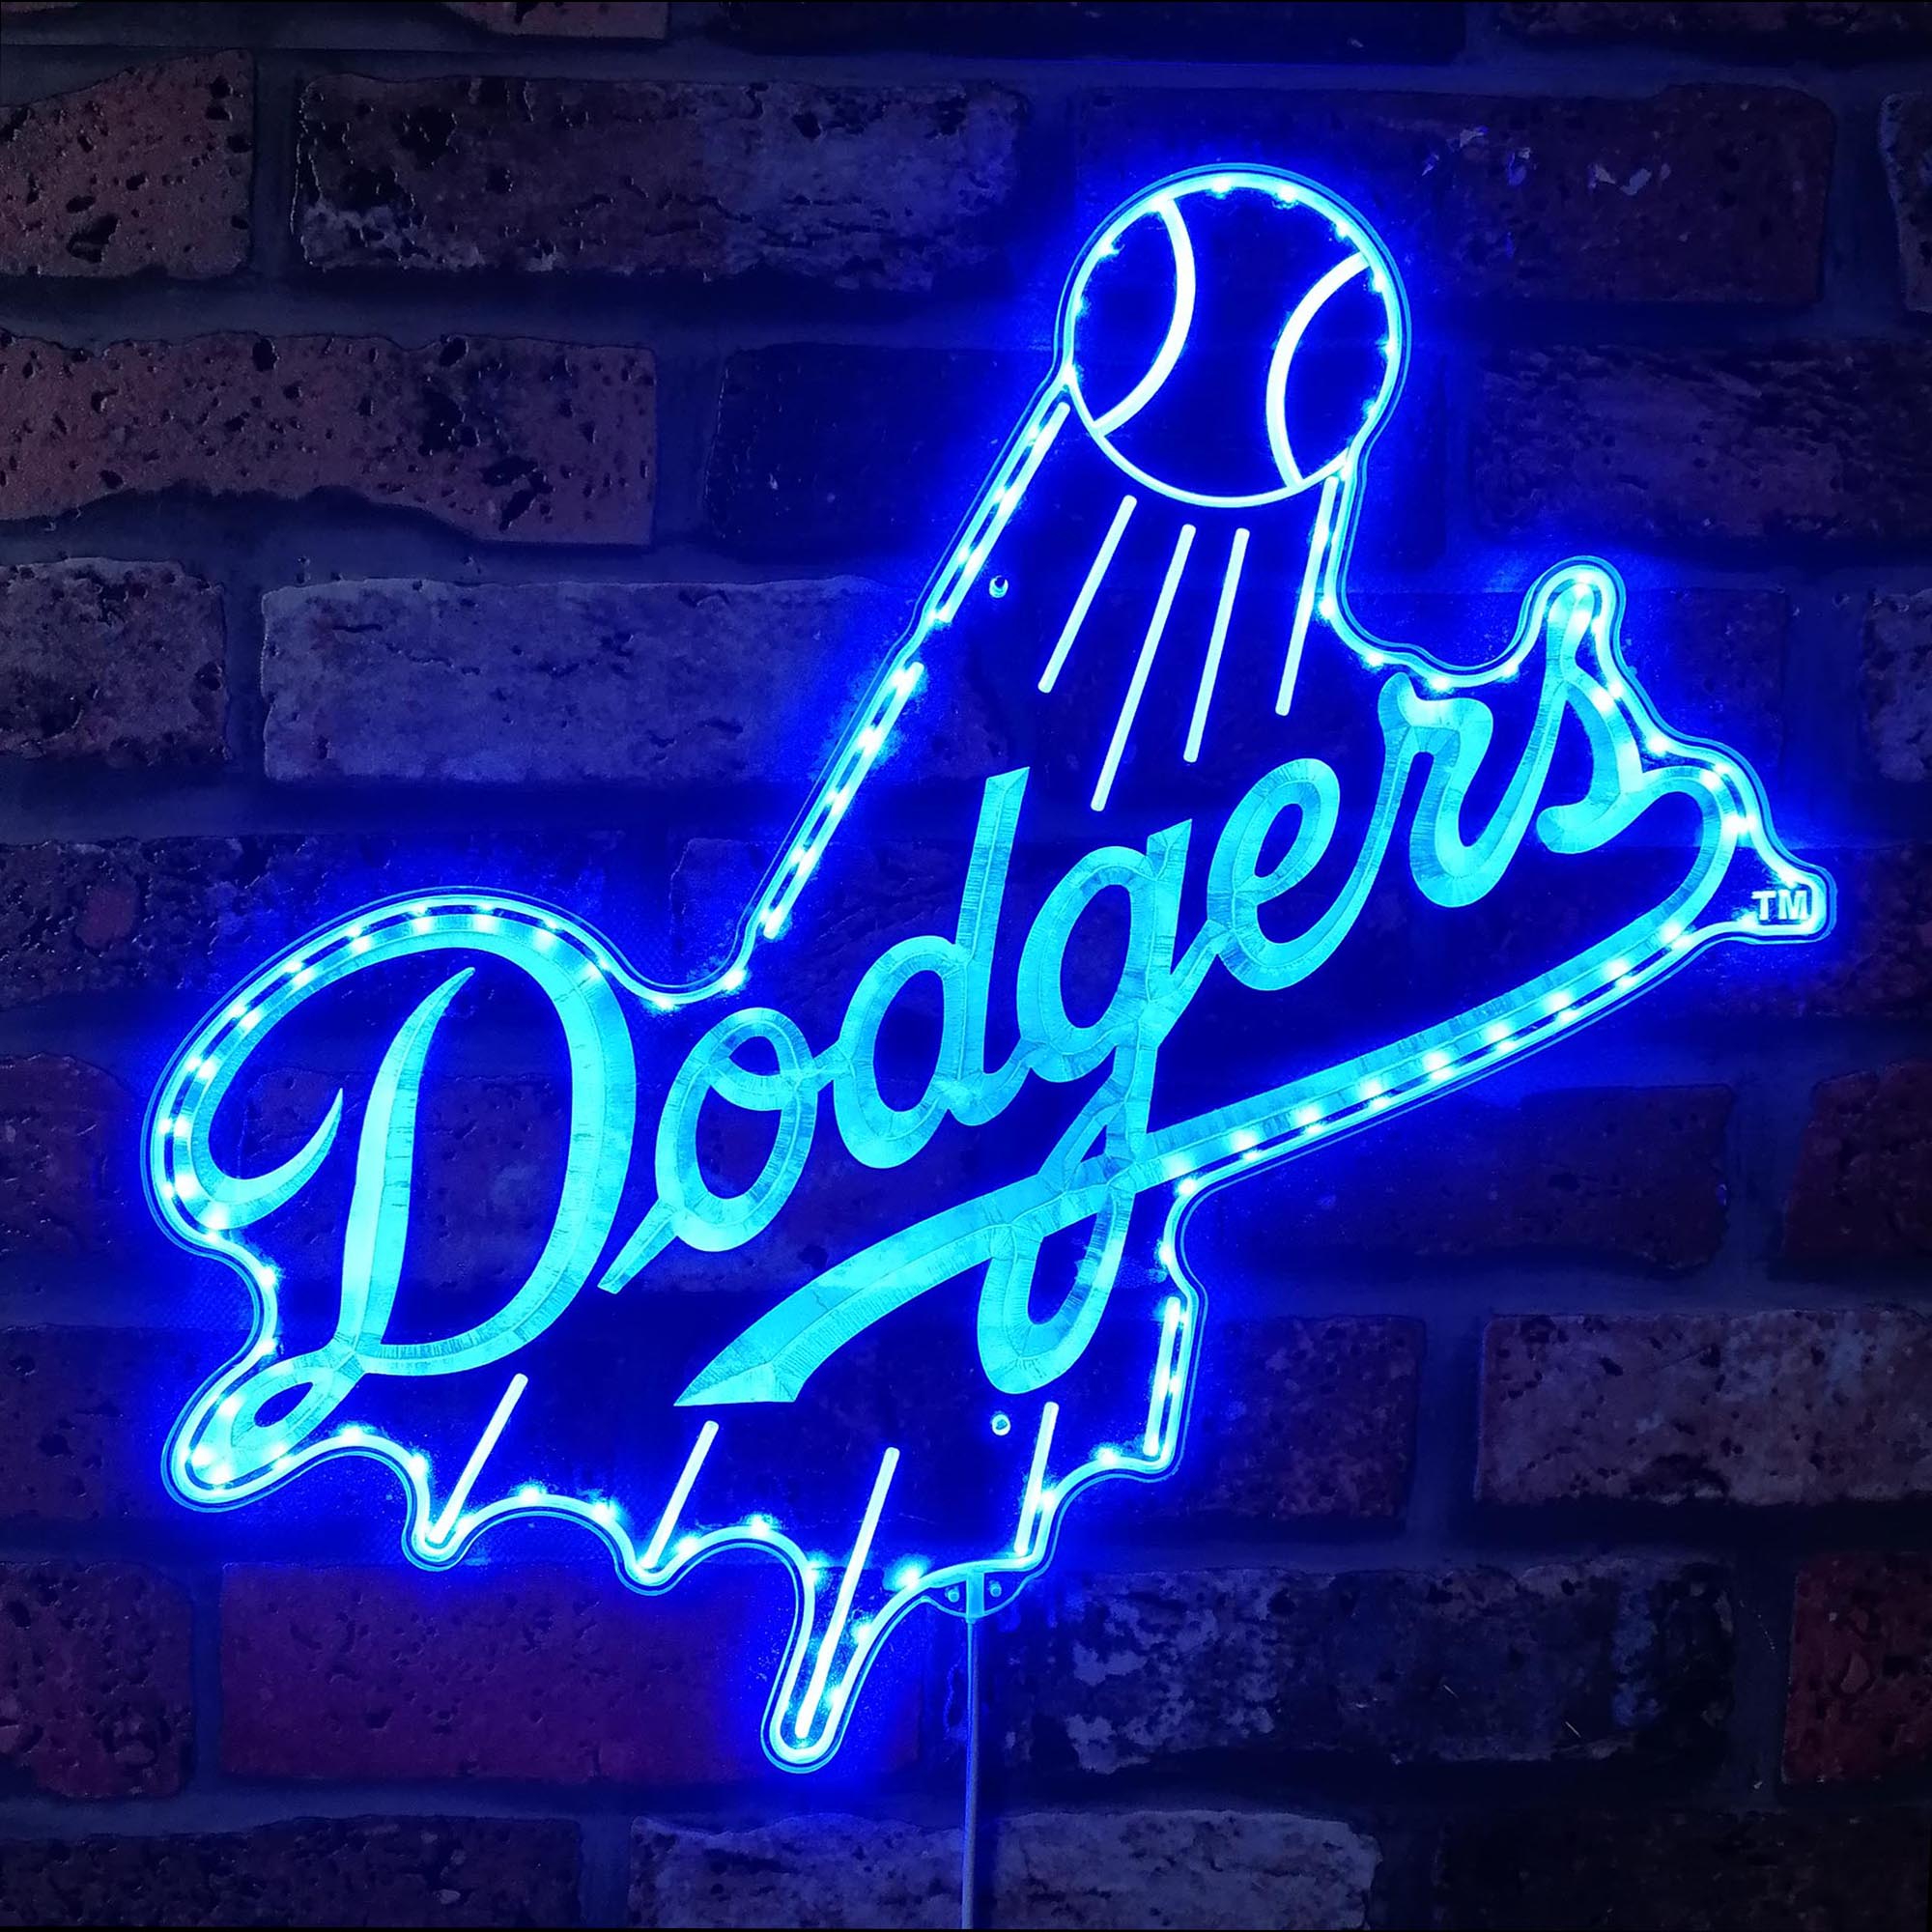 Dogers Dynamic RGB Edge Lit LED Sign